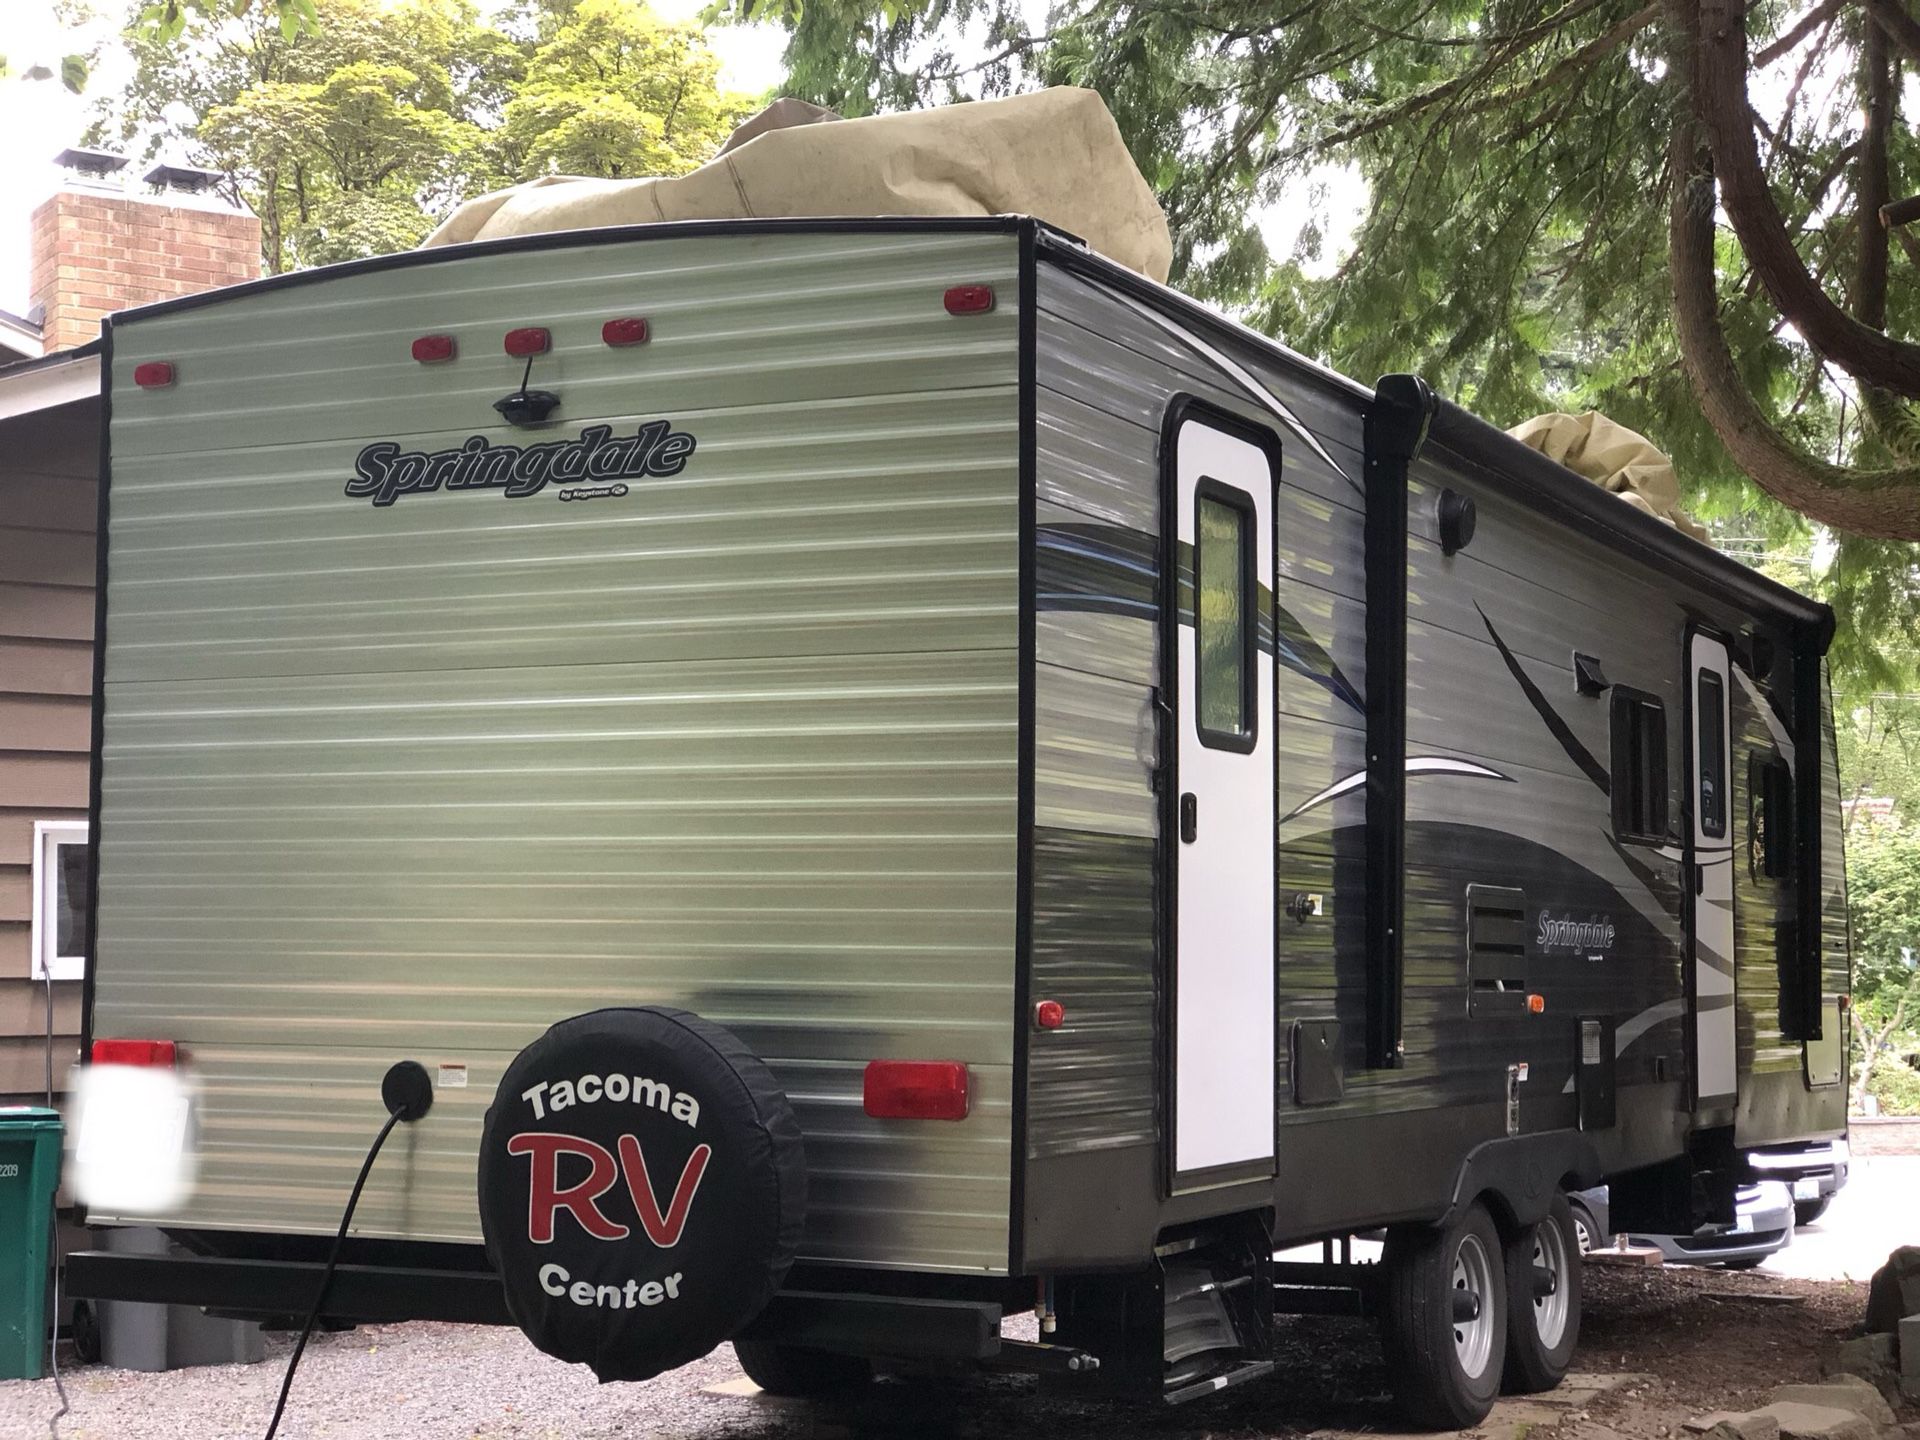 Camper trailer RV